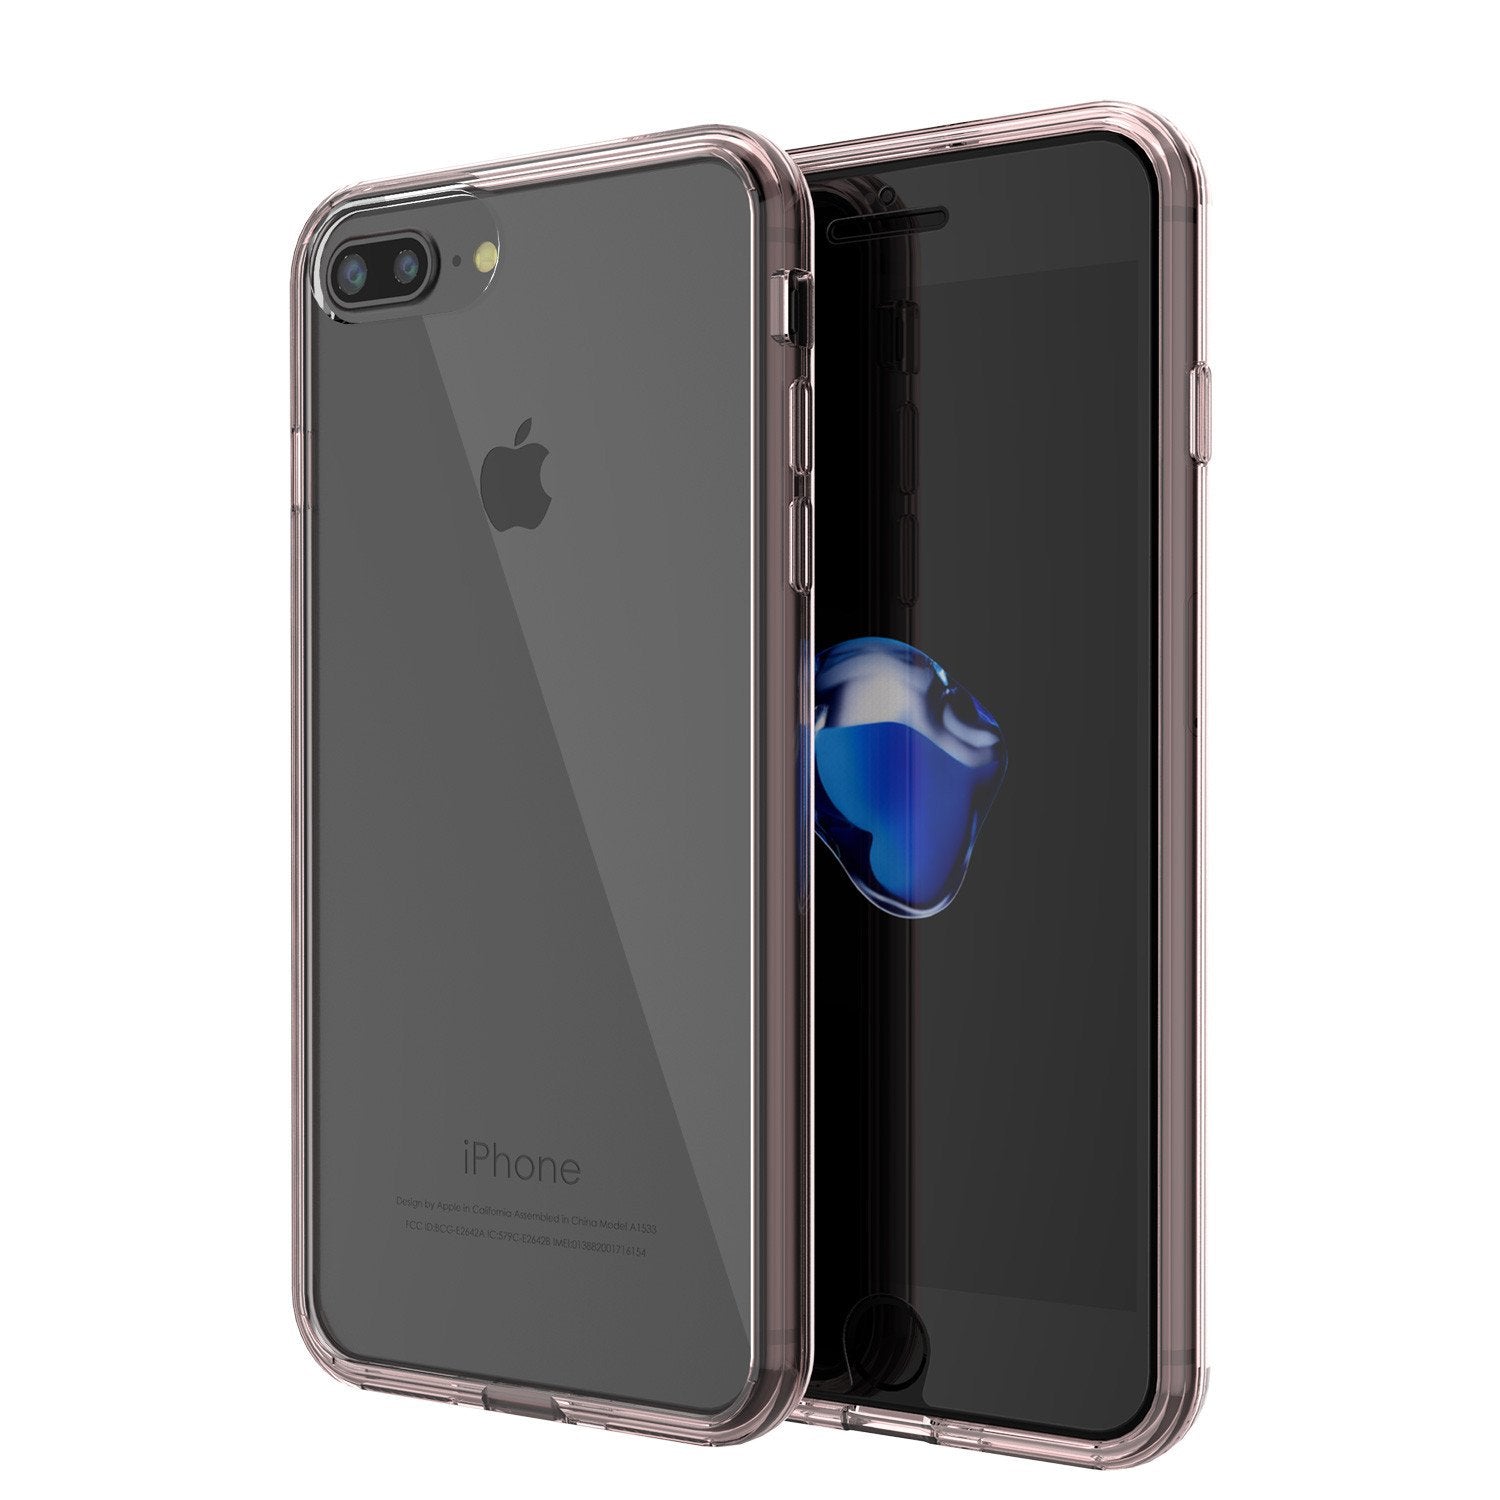 iPhone 7 Case Punkcase® LUCID 2.0 Crystal Pink Series for Apple iPhone 7 Slim | Slick Frame Lifetime Warranty Exchange